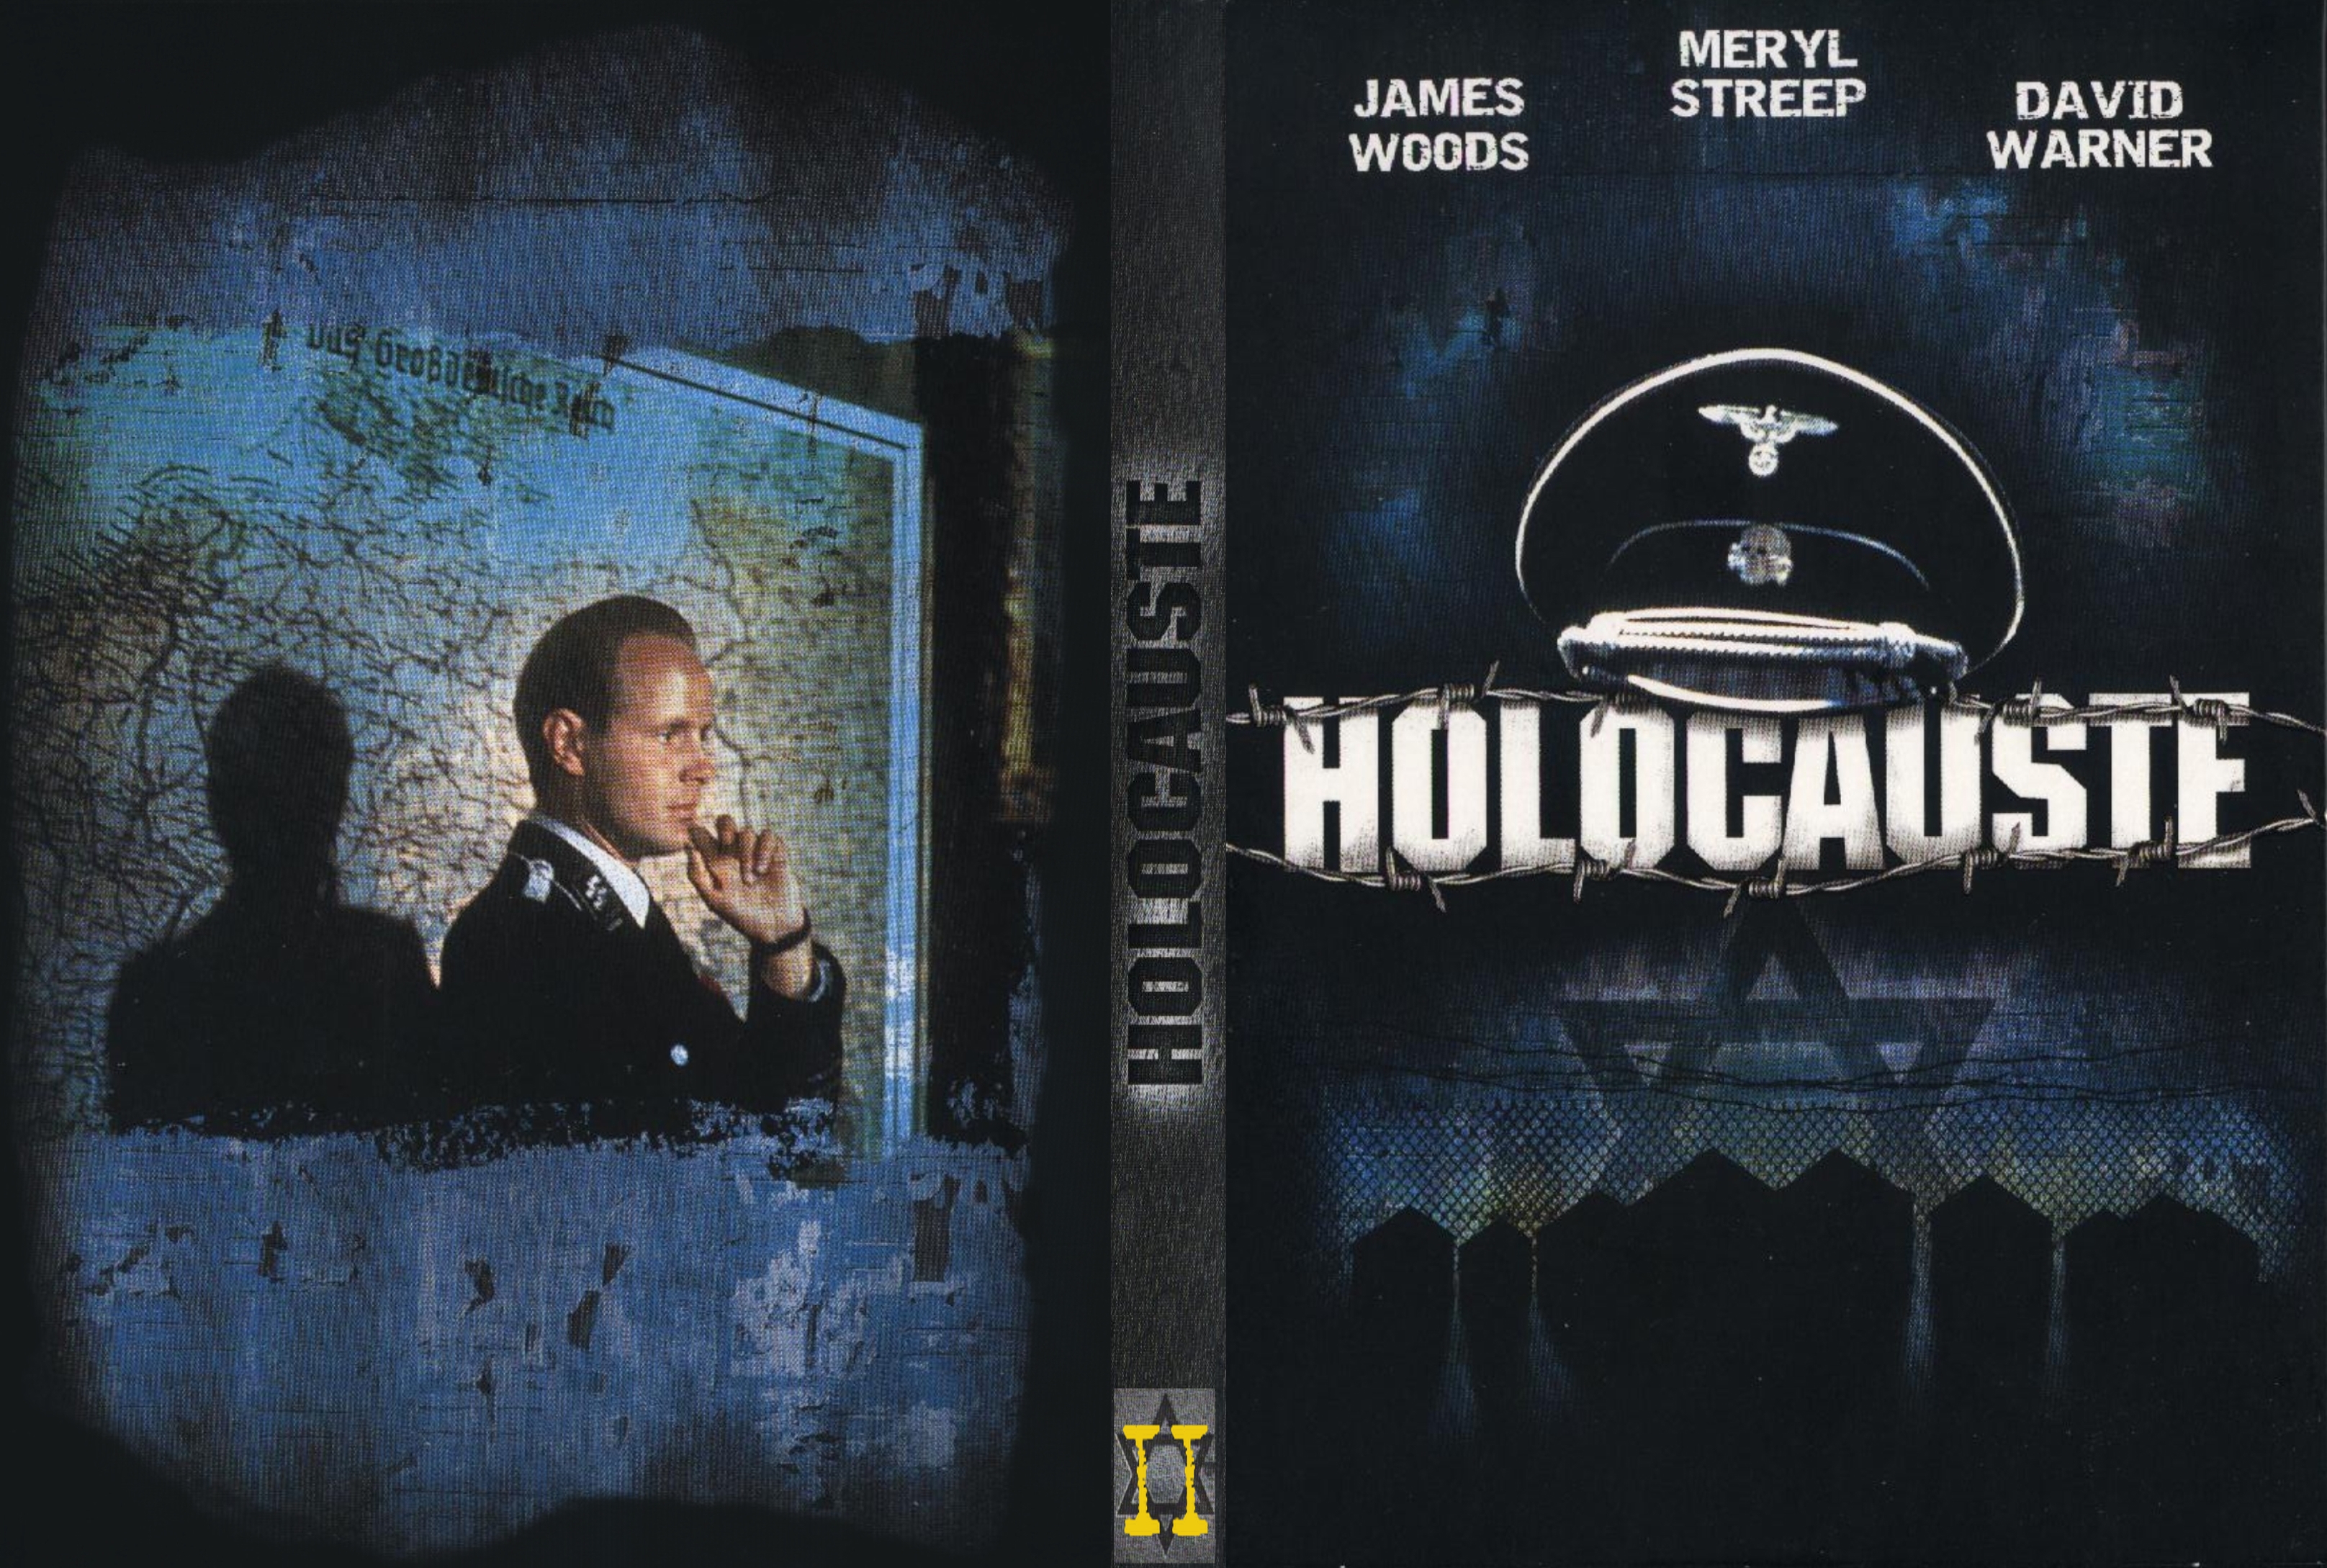 Jaquette DVD Holocauste DVD 2